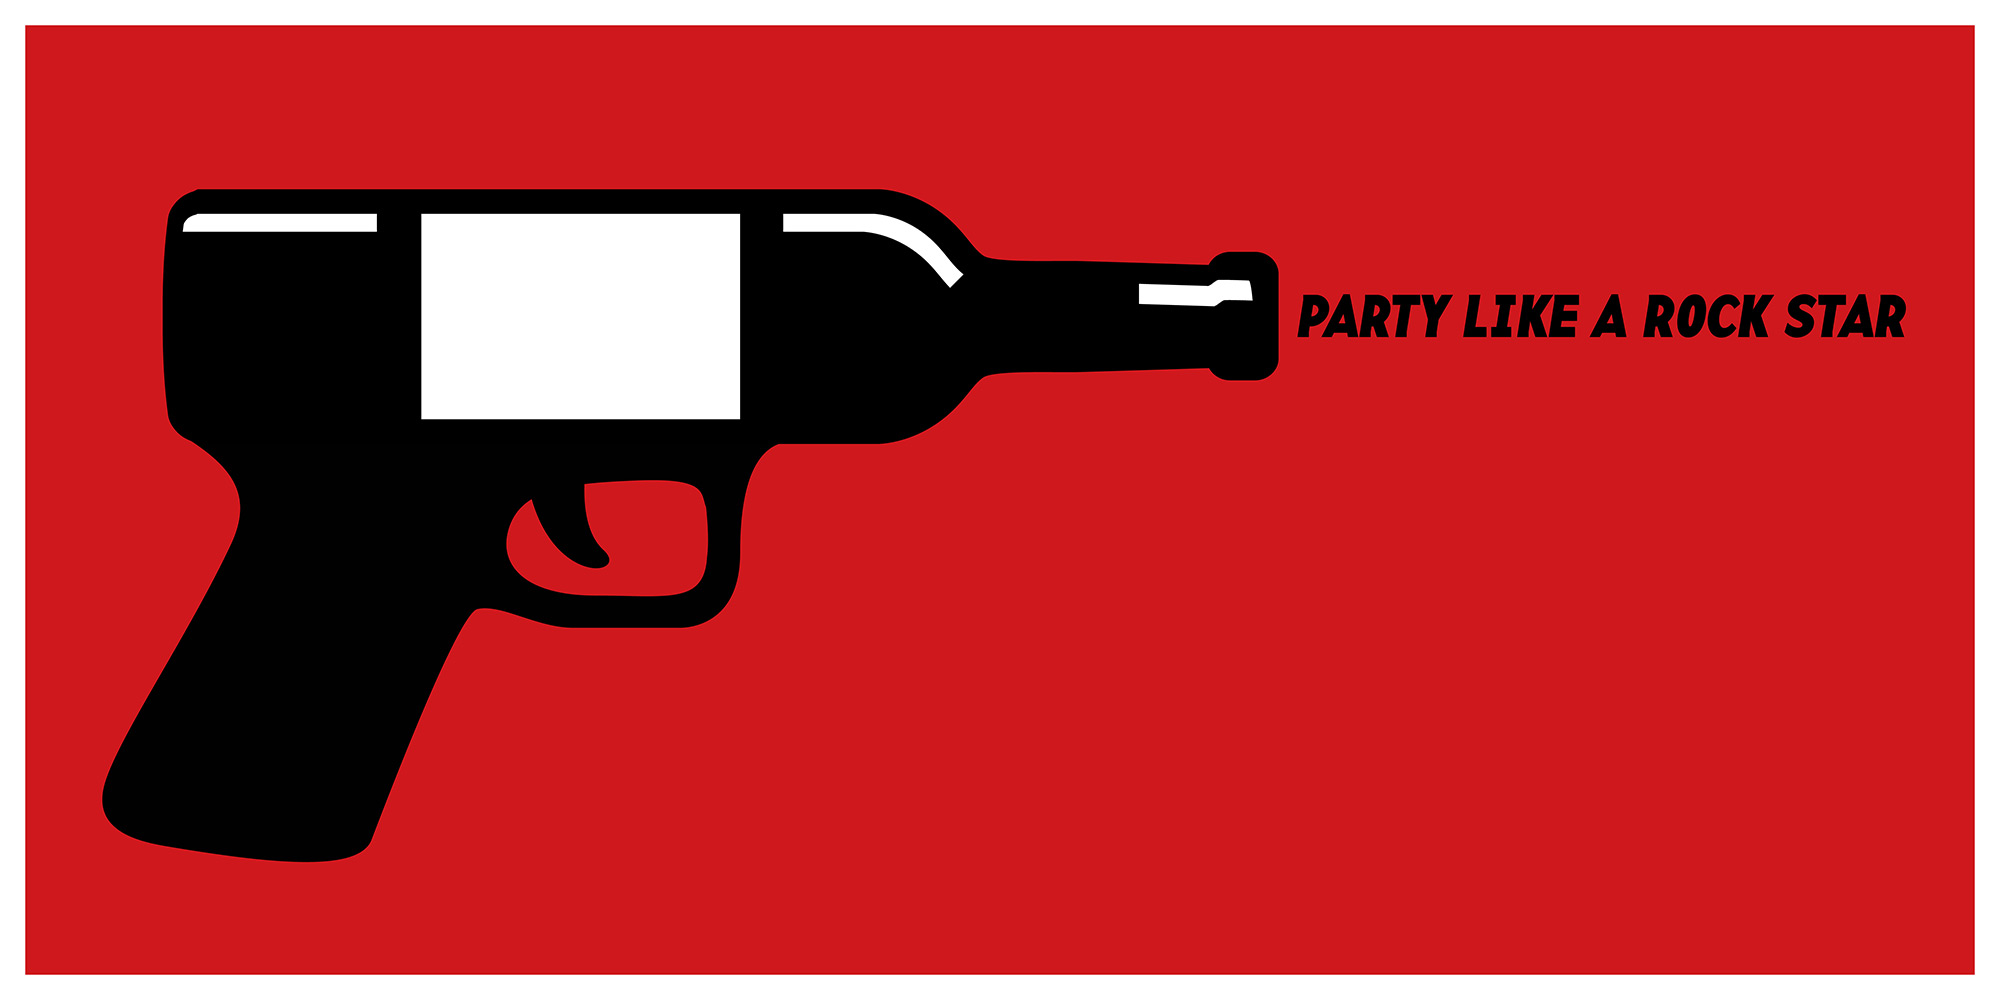 Jeff Kern design for "Party Like a Rockstar"